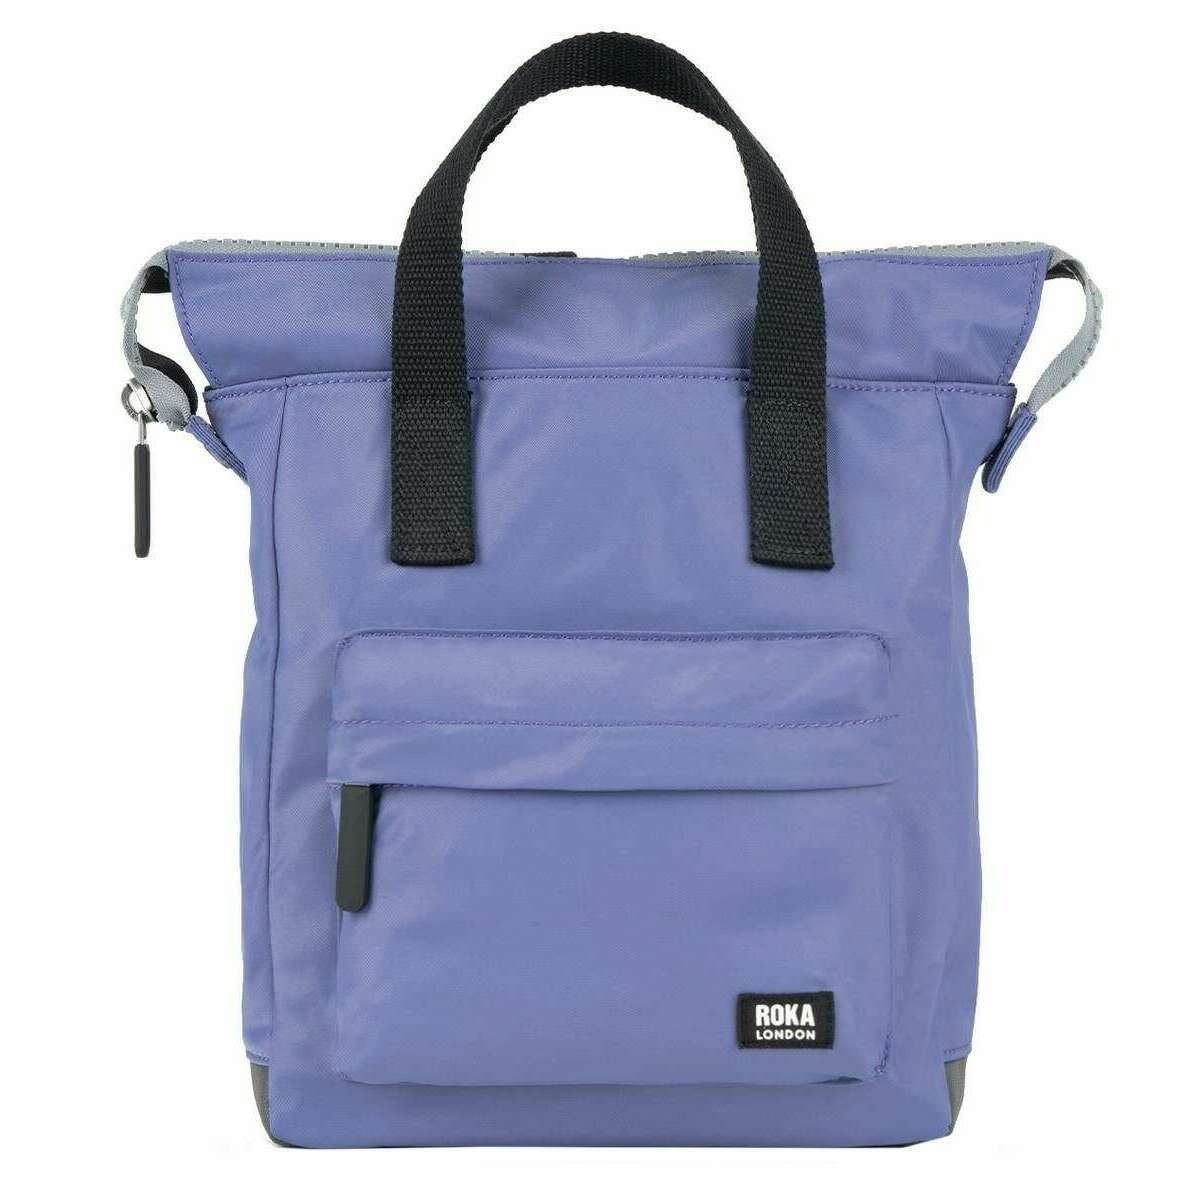 Roka Bantry B Small Black Label Recycled Nylon Backpack - Dusted Peri Purple